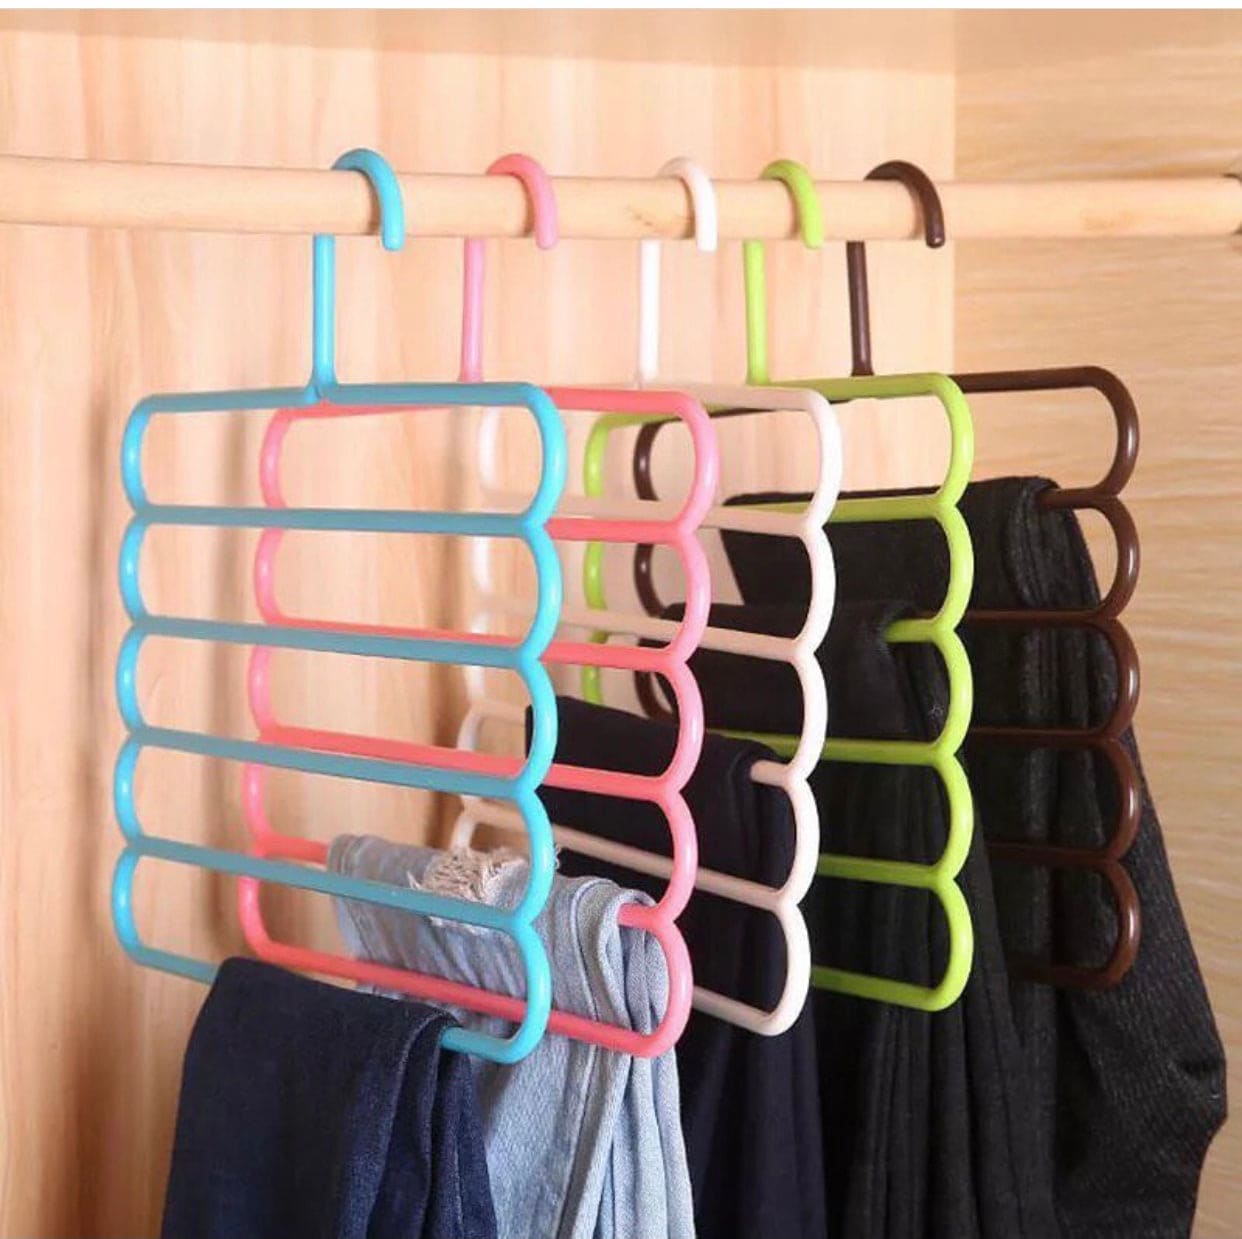 5 Layer S Shape Multifunctional Clothes Hanger, Pants Hangers, Holders Trousers, Hanger Storage Rack, Clothes Hanger, Wardrobe Closet Organization, Clothing Hangers, Colorful Hanger